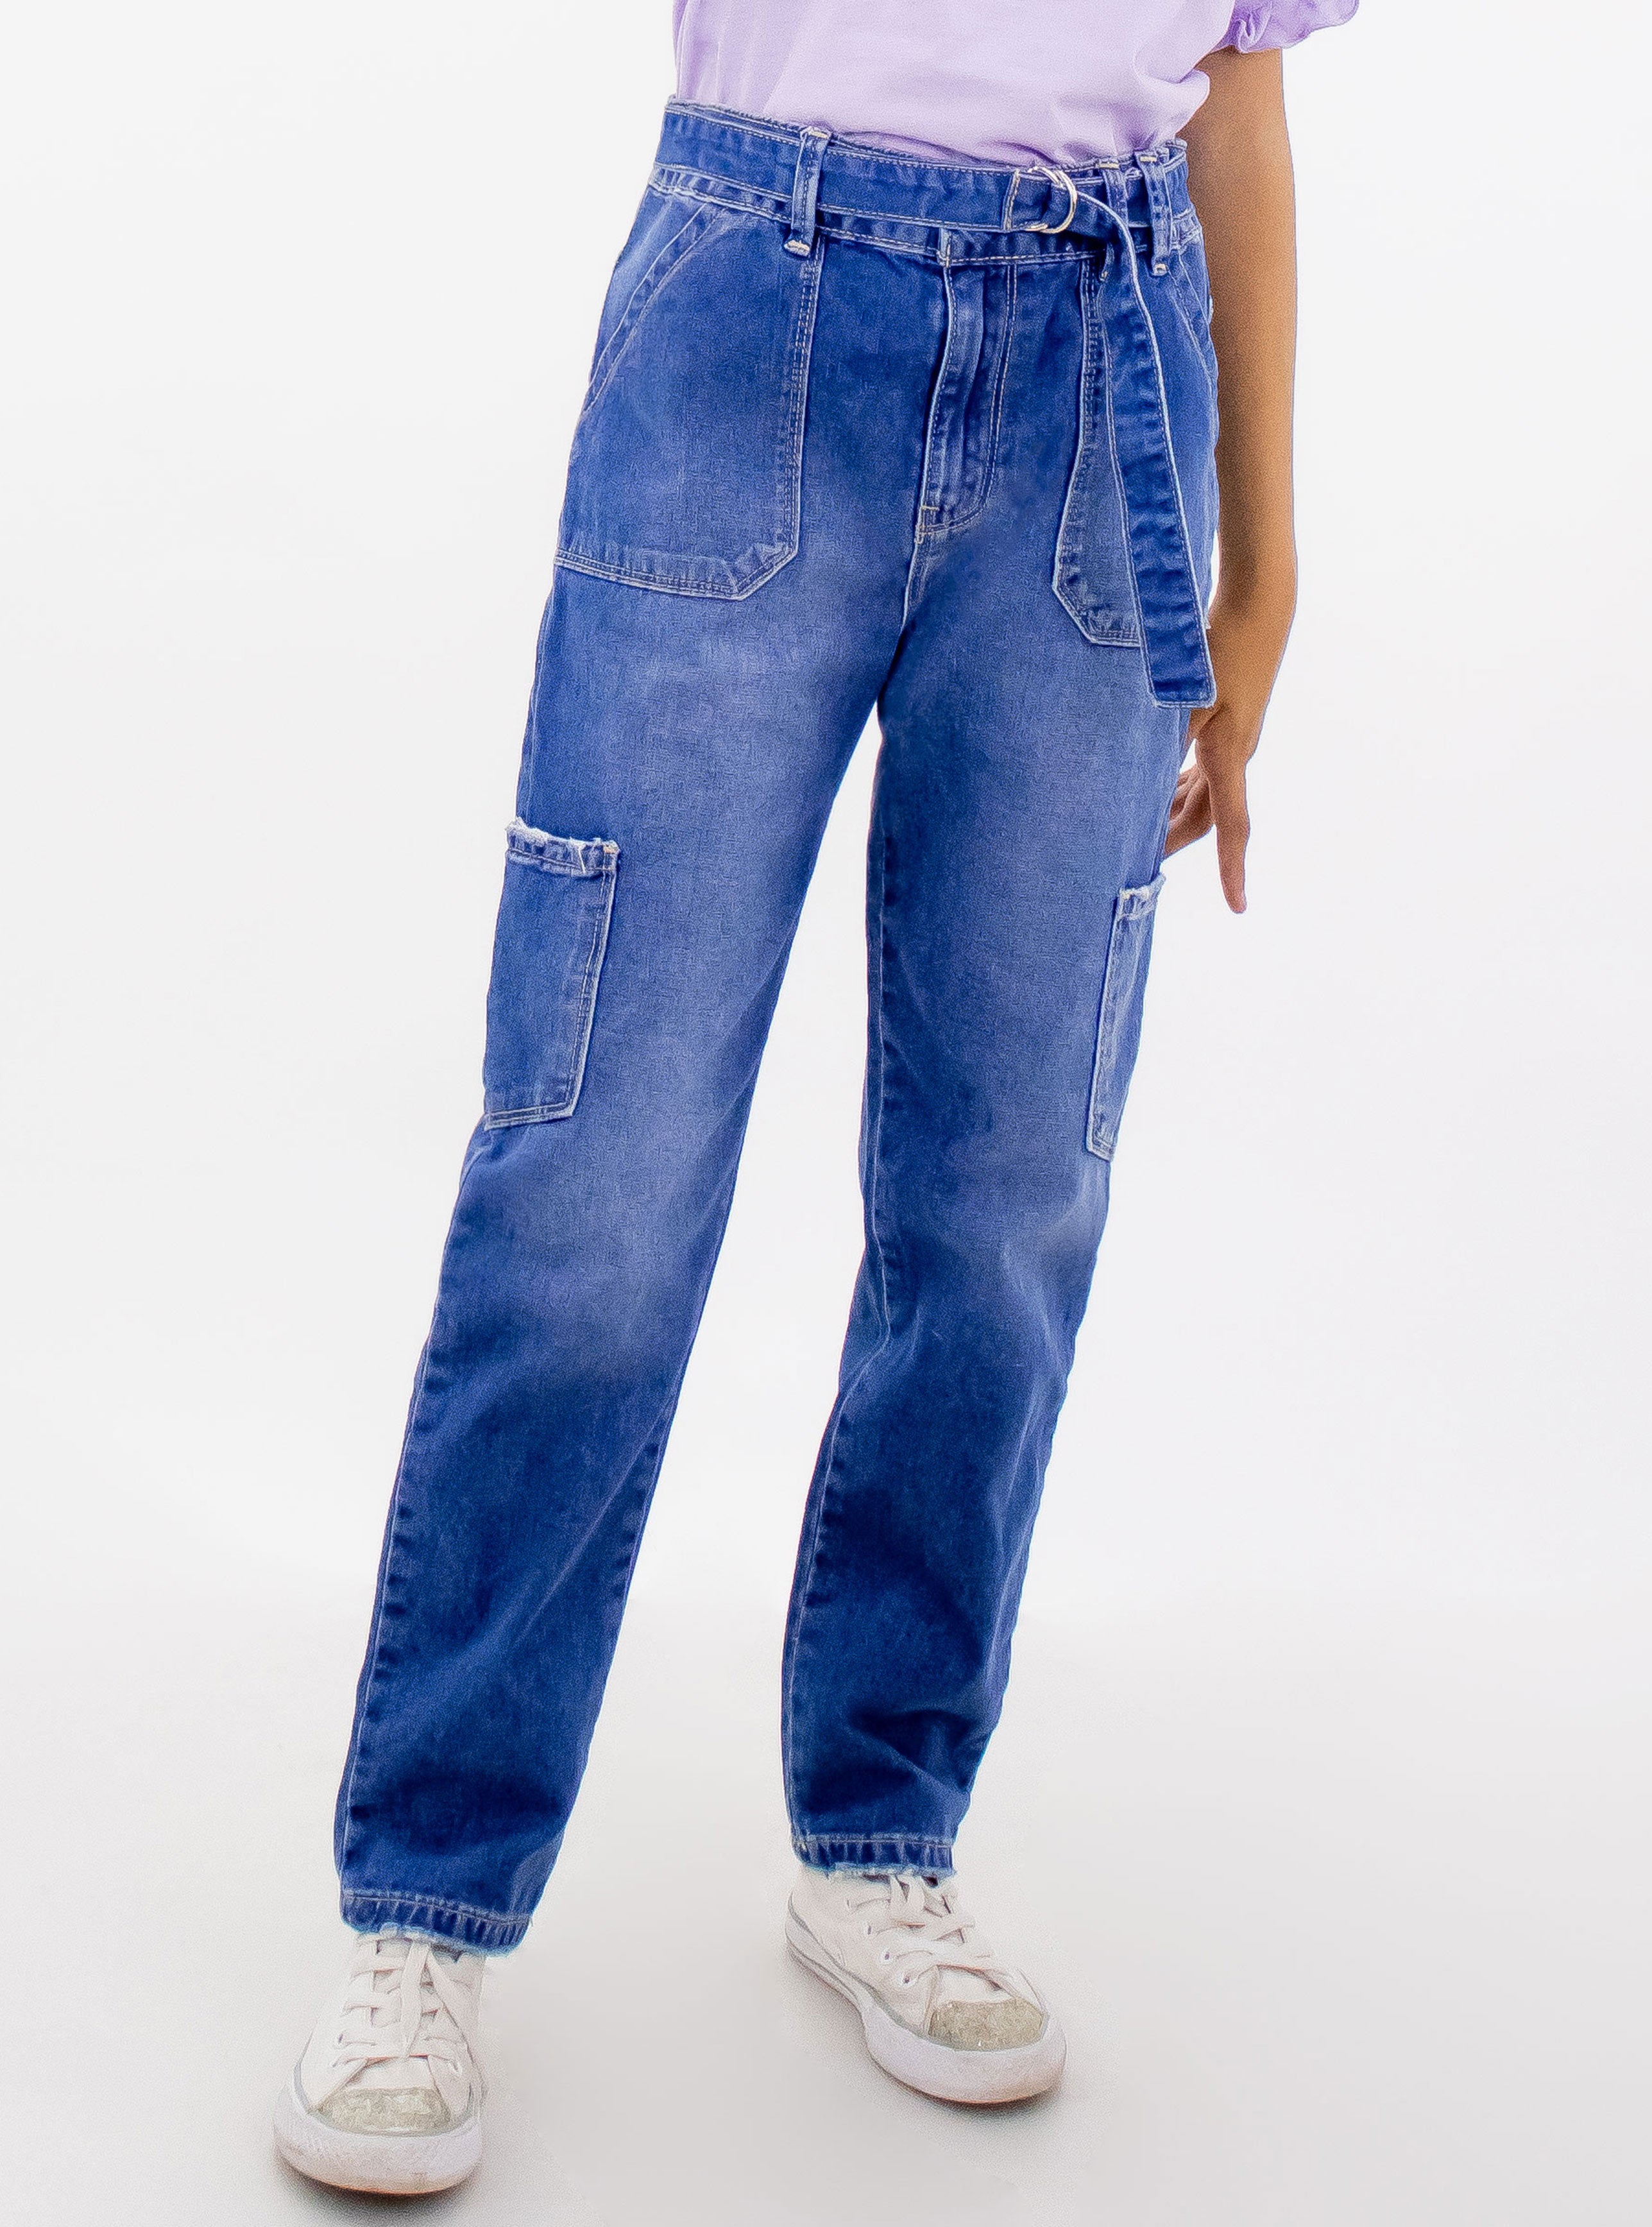 Jeans cargo con cinturón – COMFORT JEANS